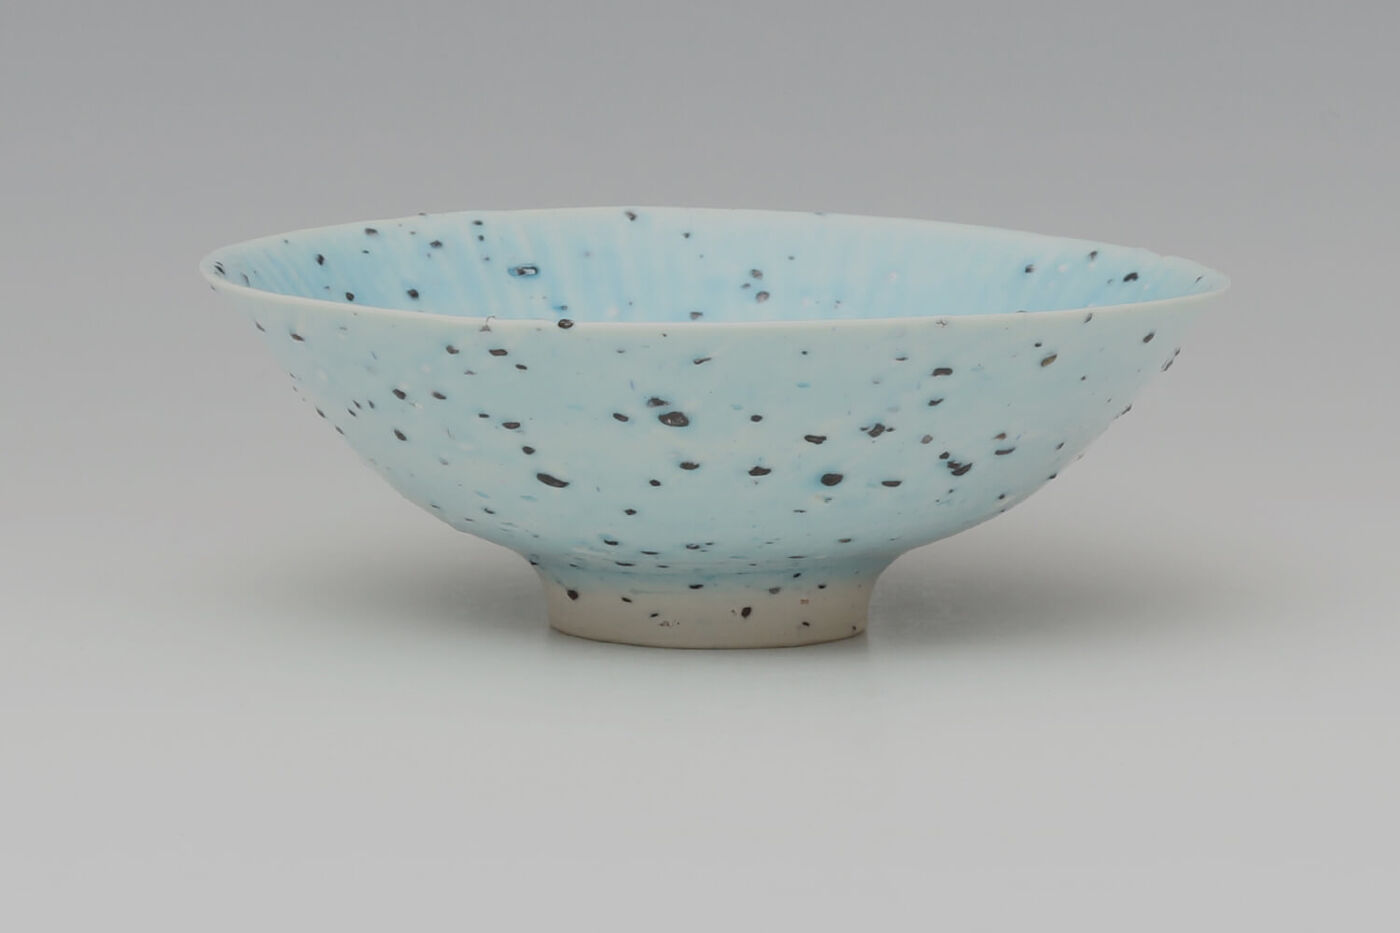 Peter Wills Ceramic Pale Blue River Grogged Porcelain Bowl 194